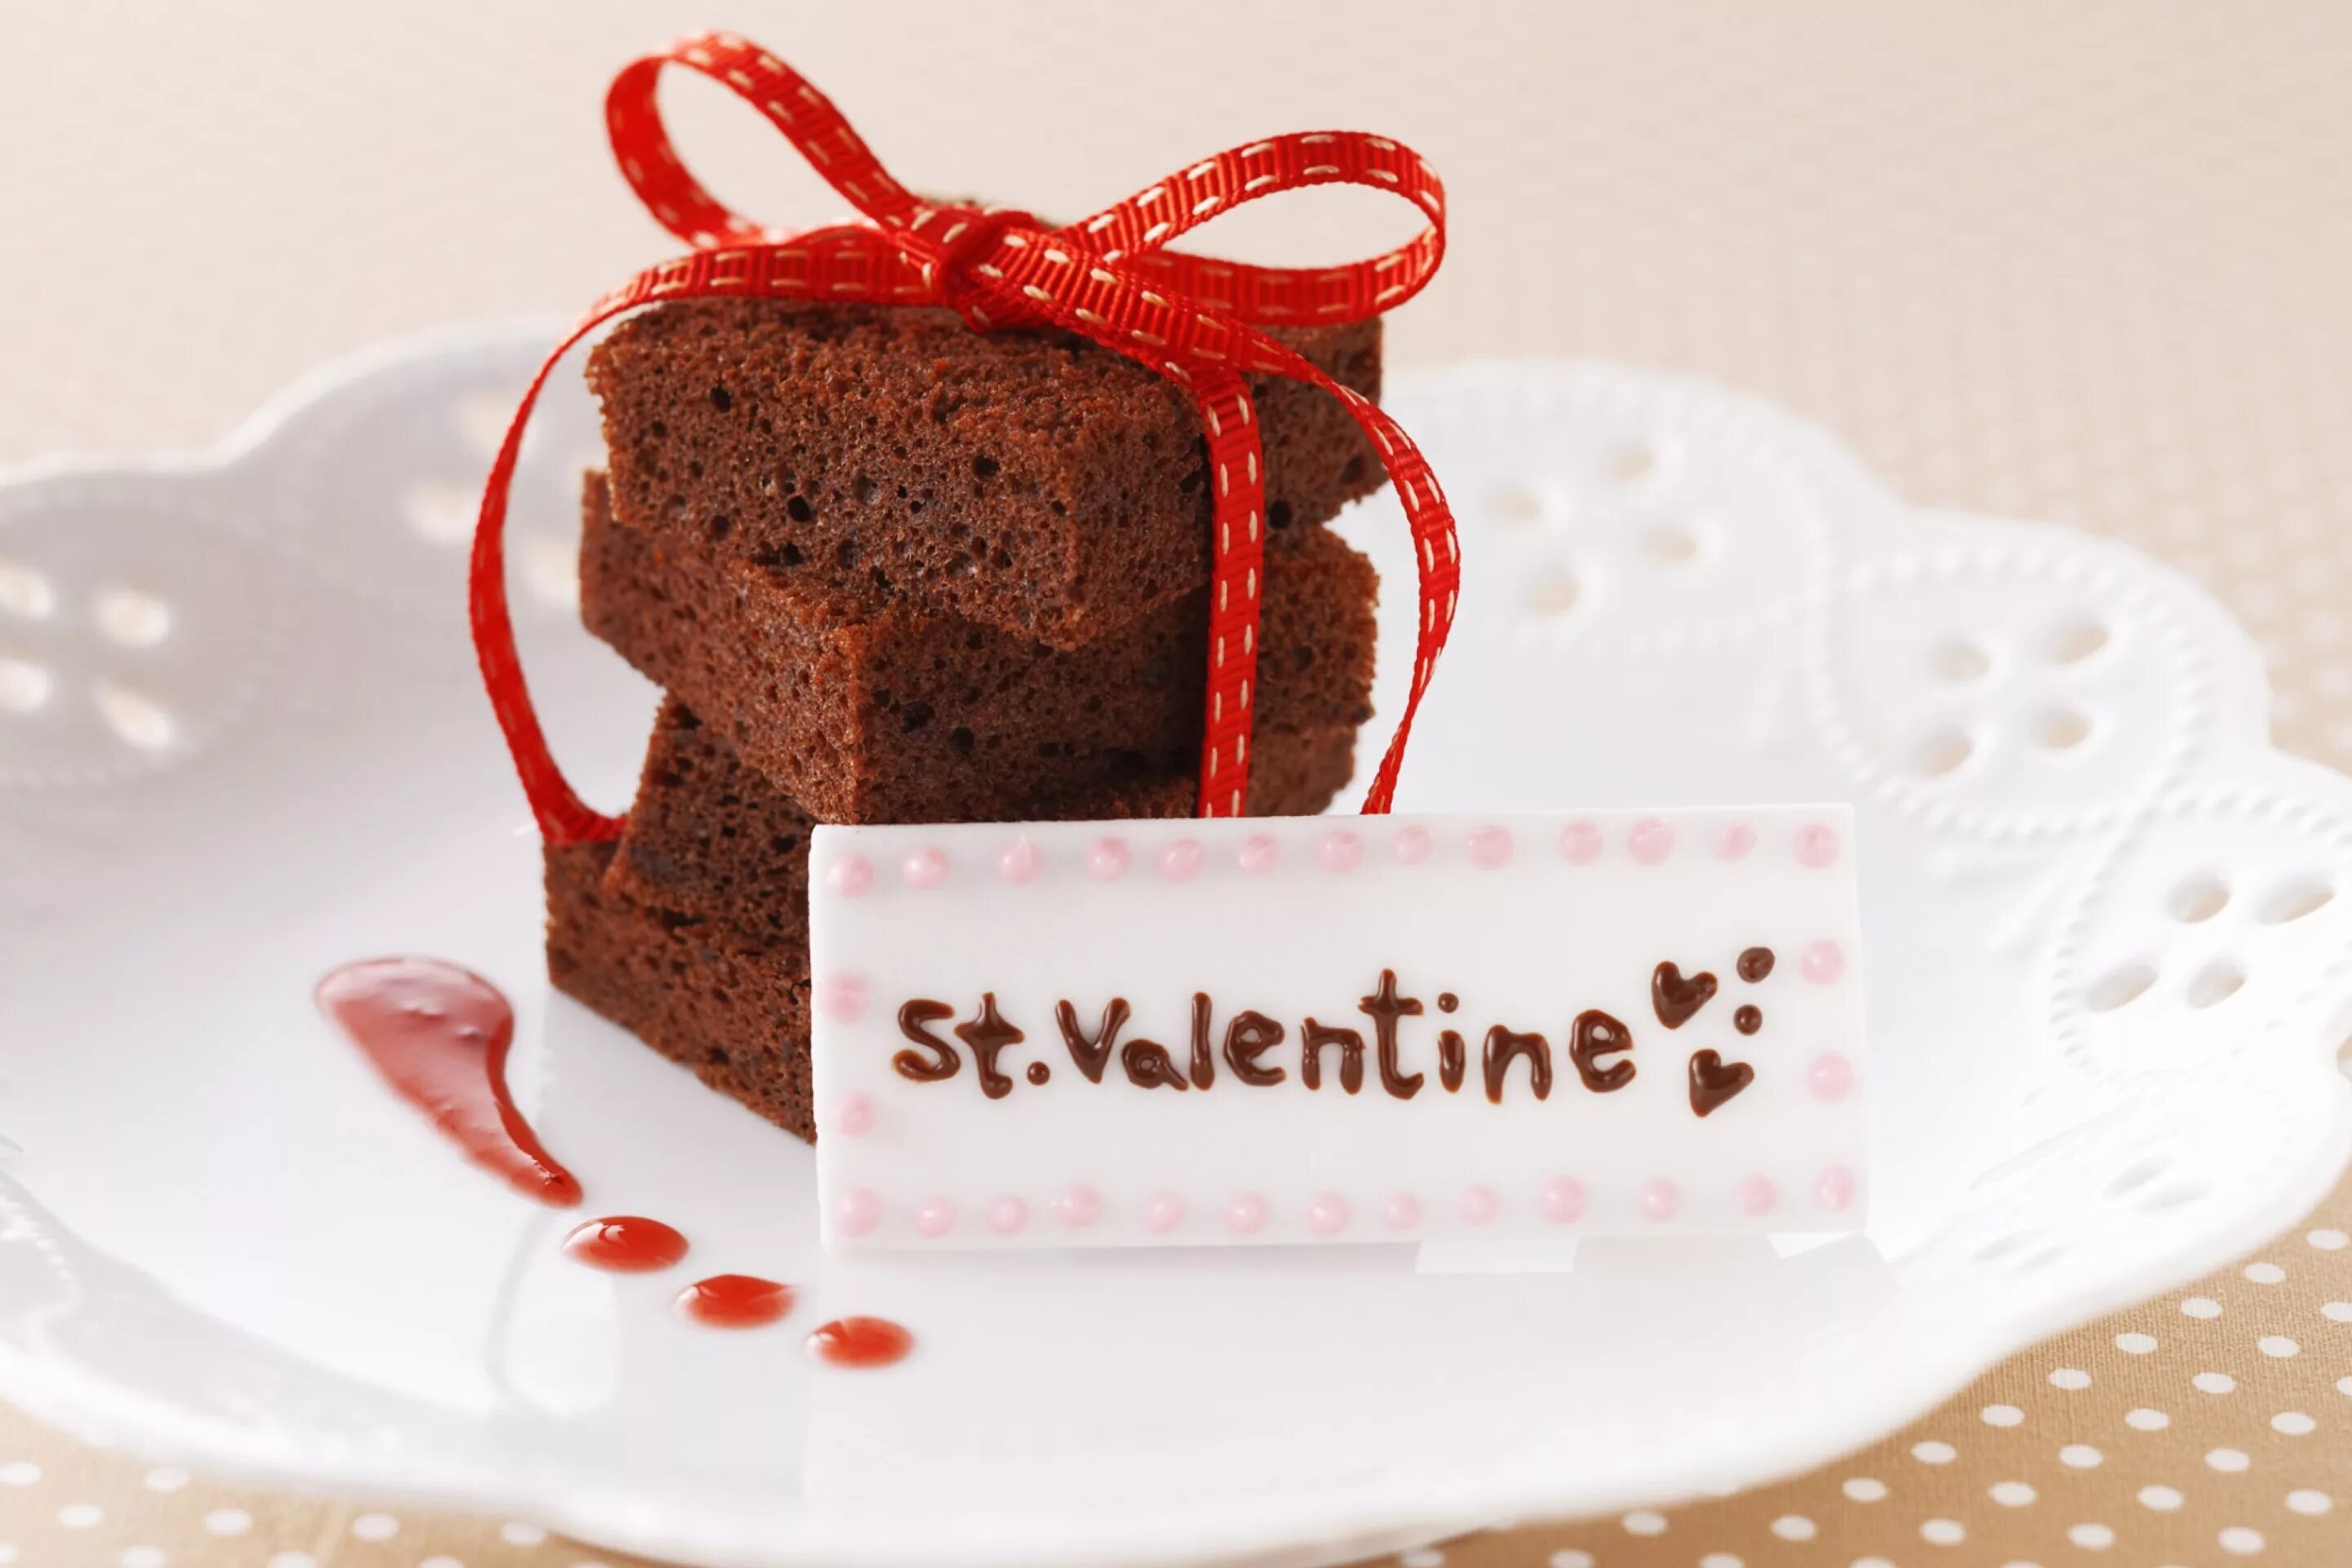 St Valentine's Day картинки. С 14 февраля картинки. Открытка со сладостями.